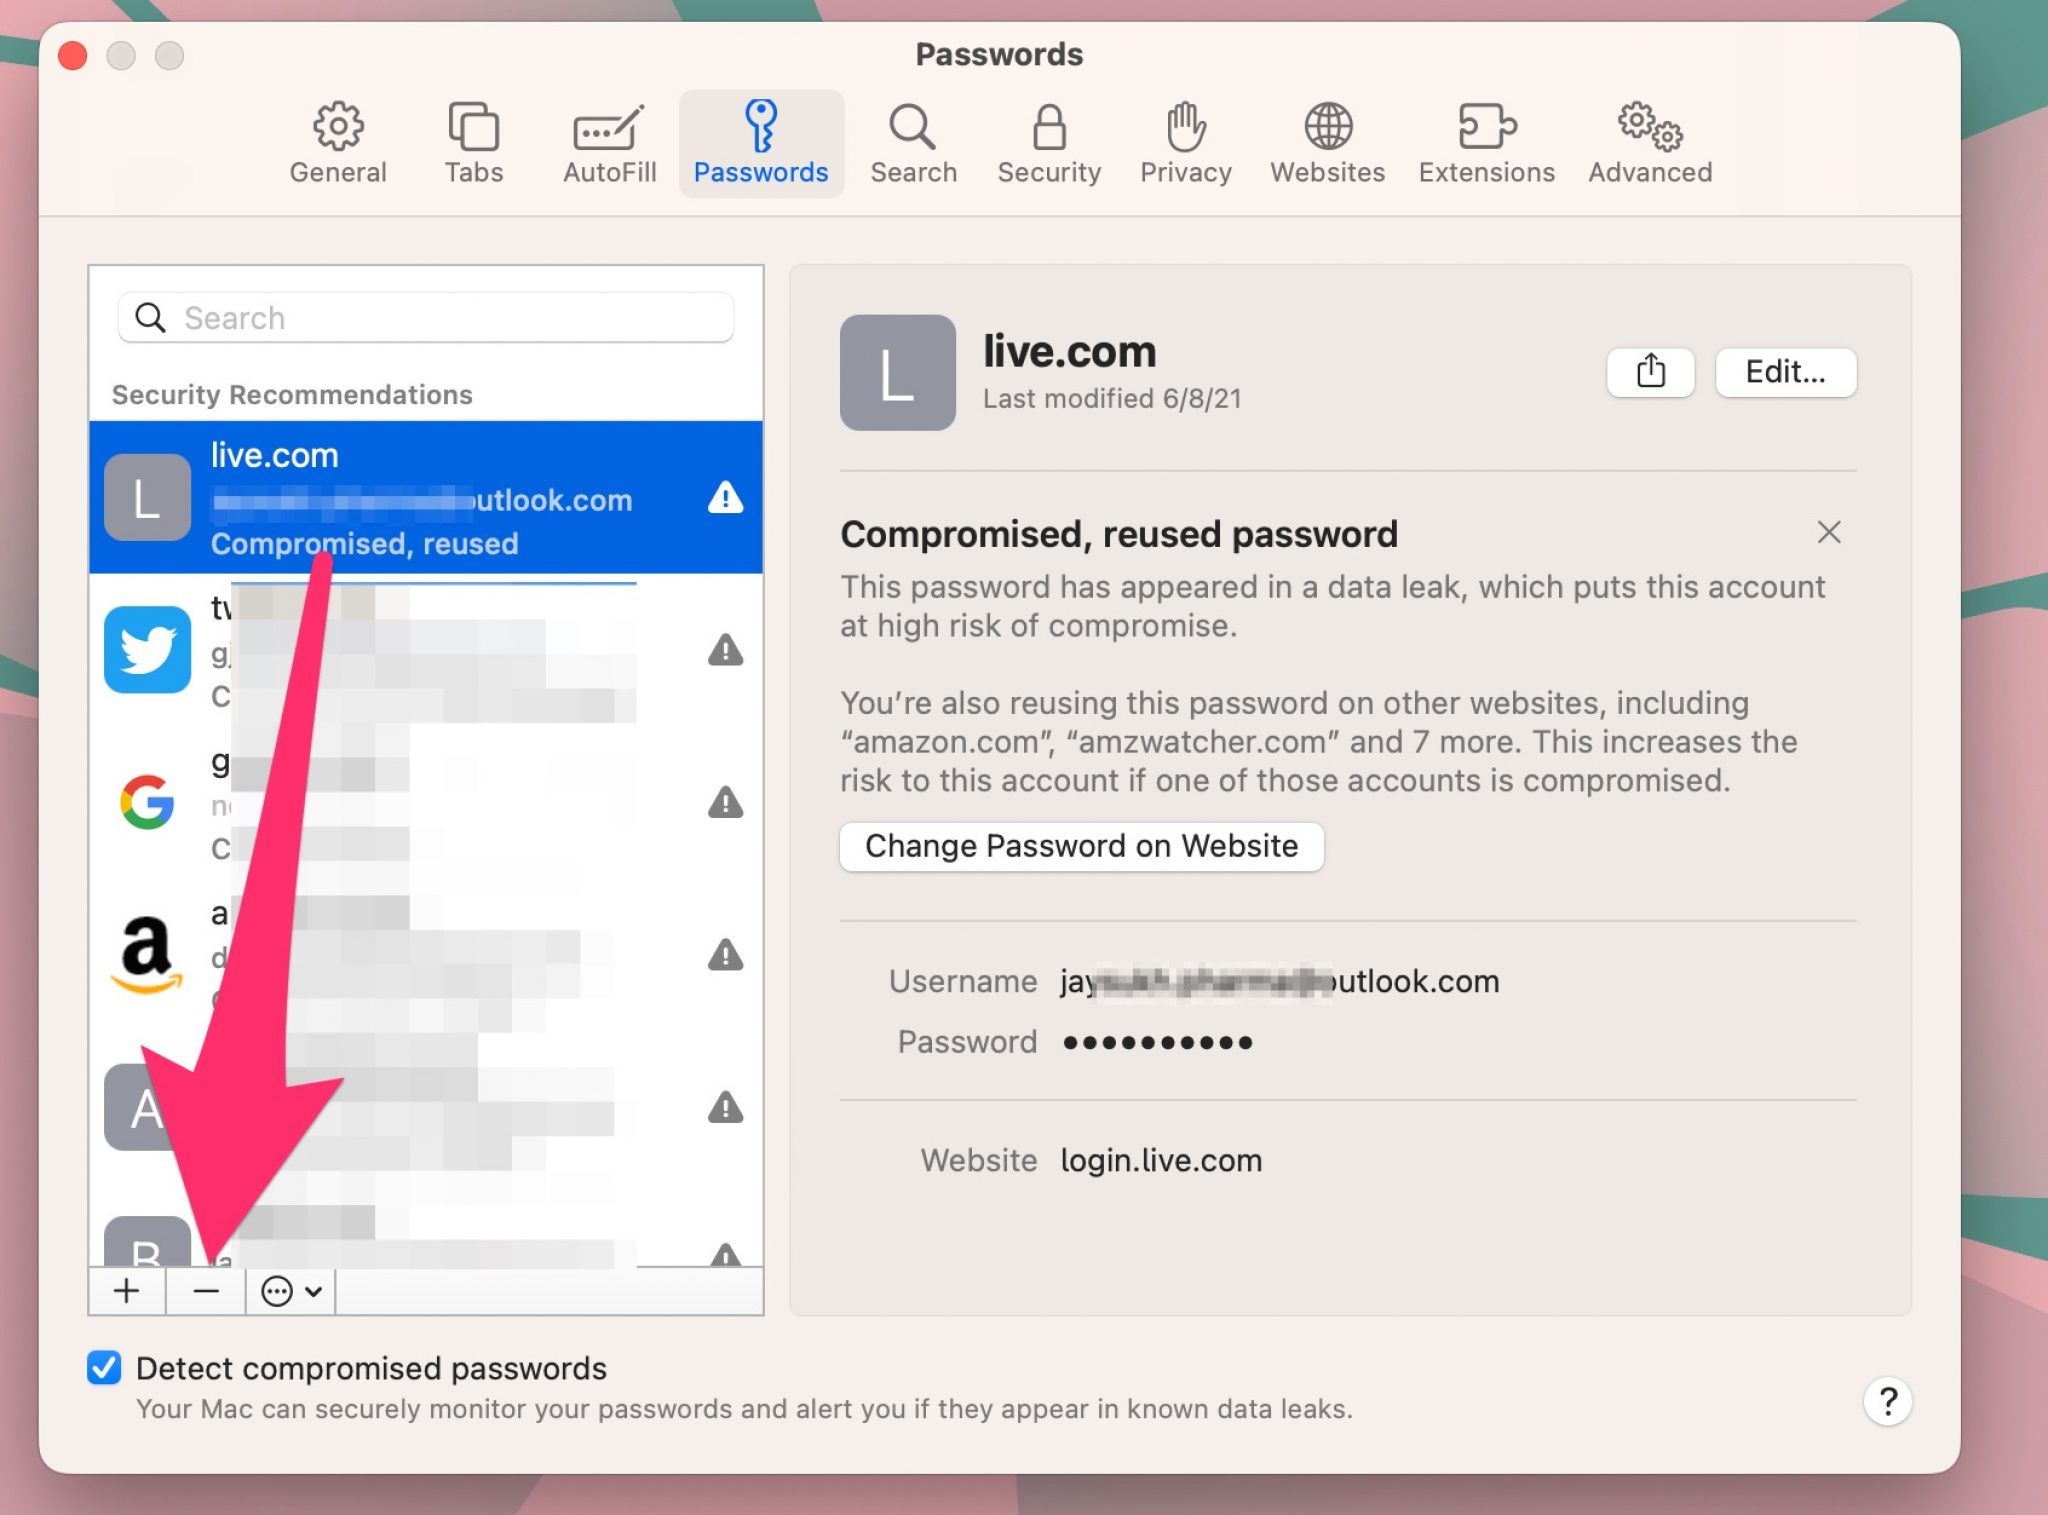 delete saved passwords safari browser